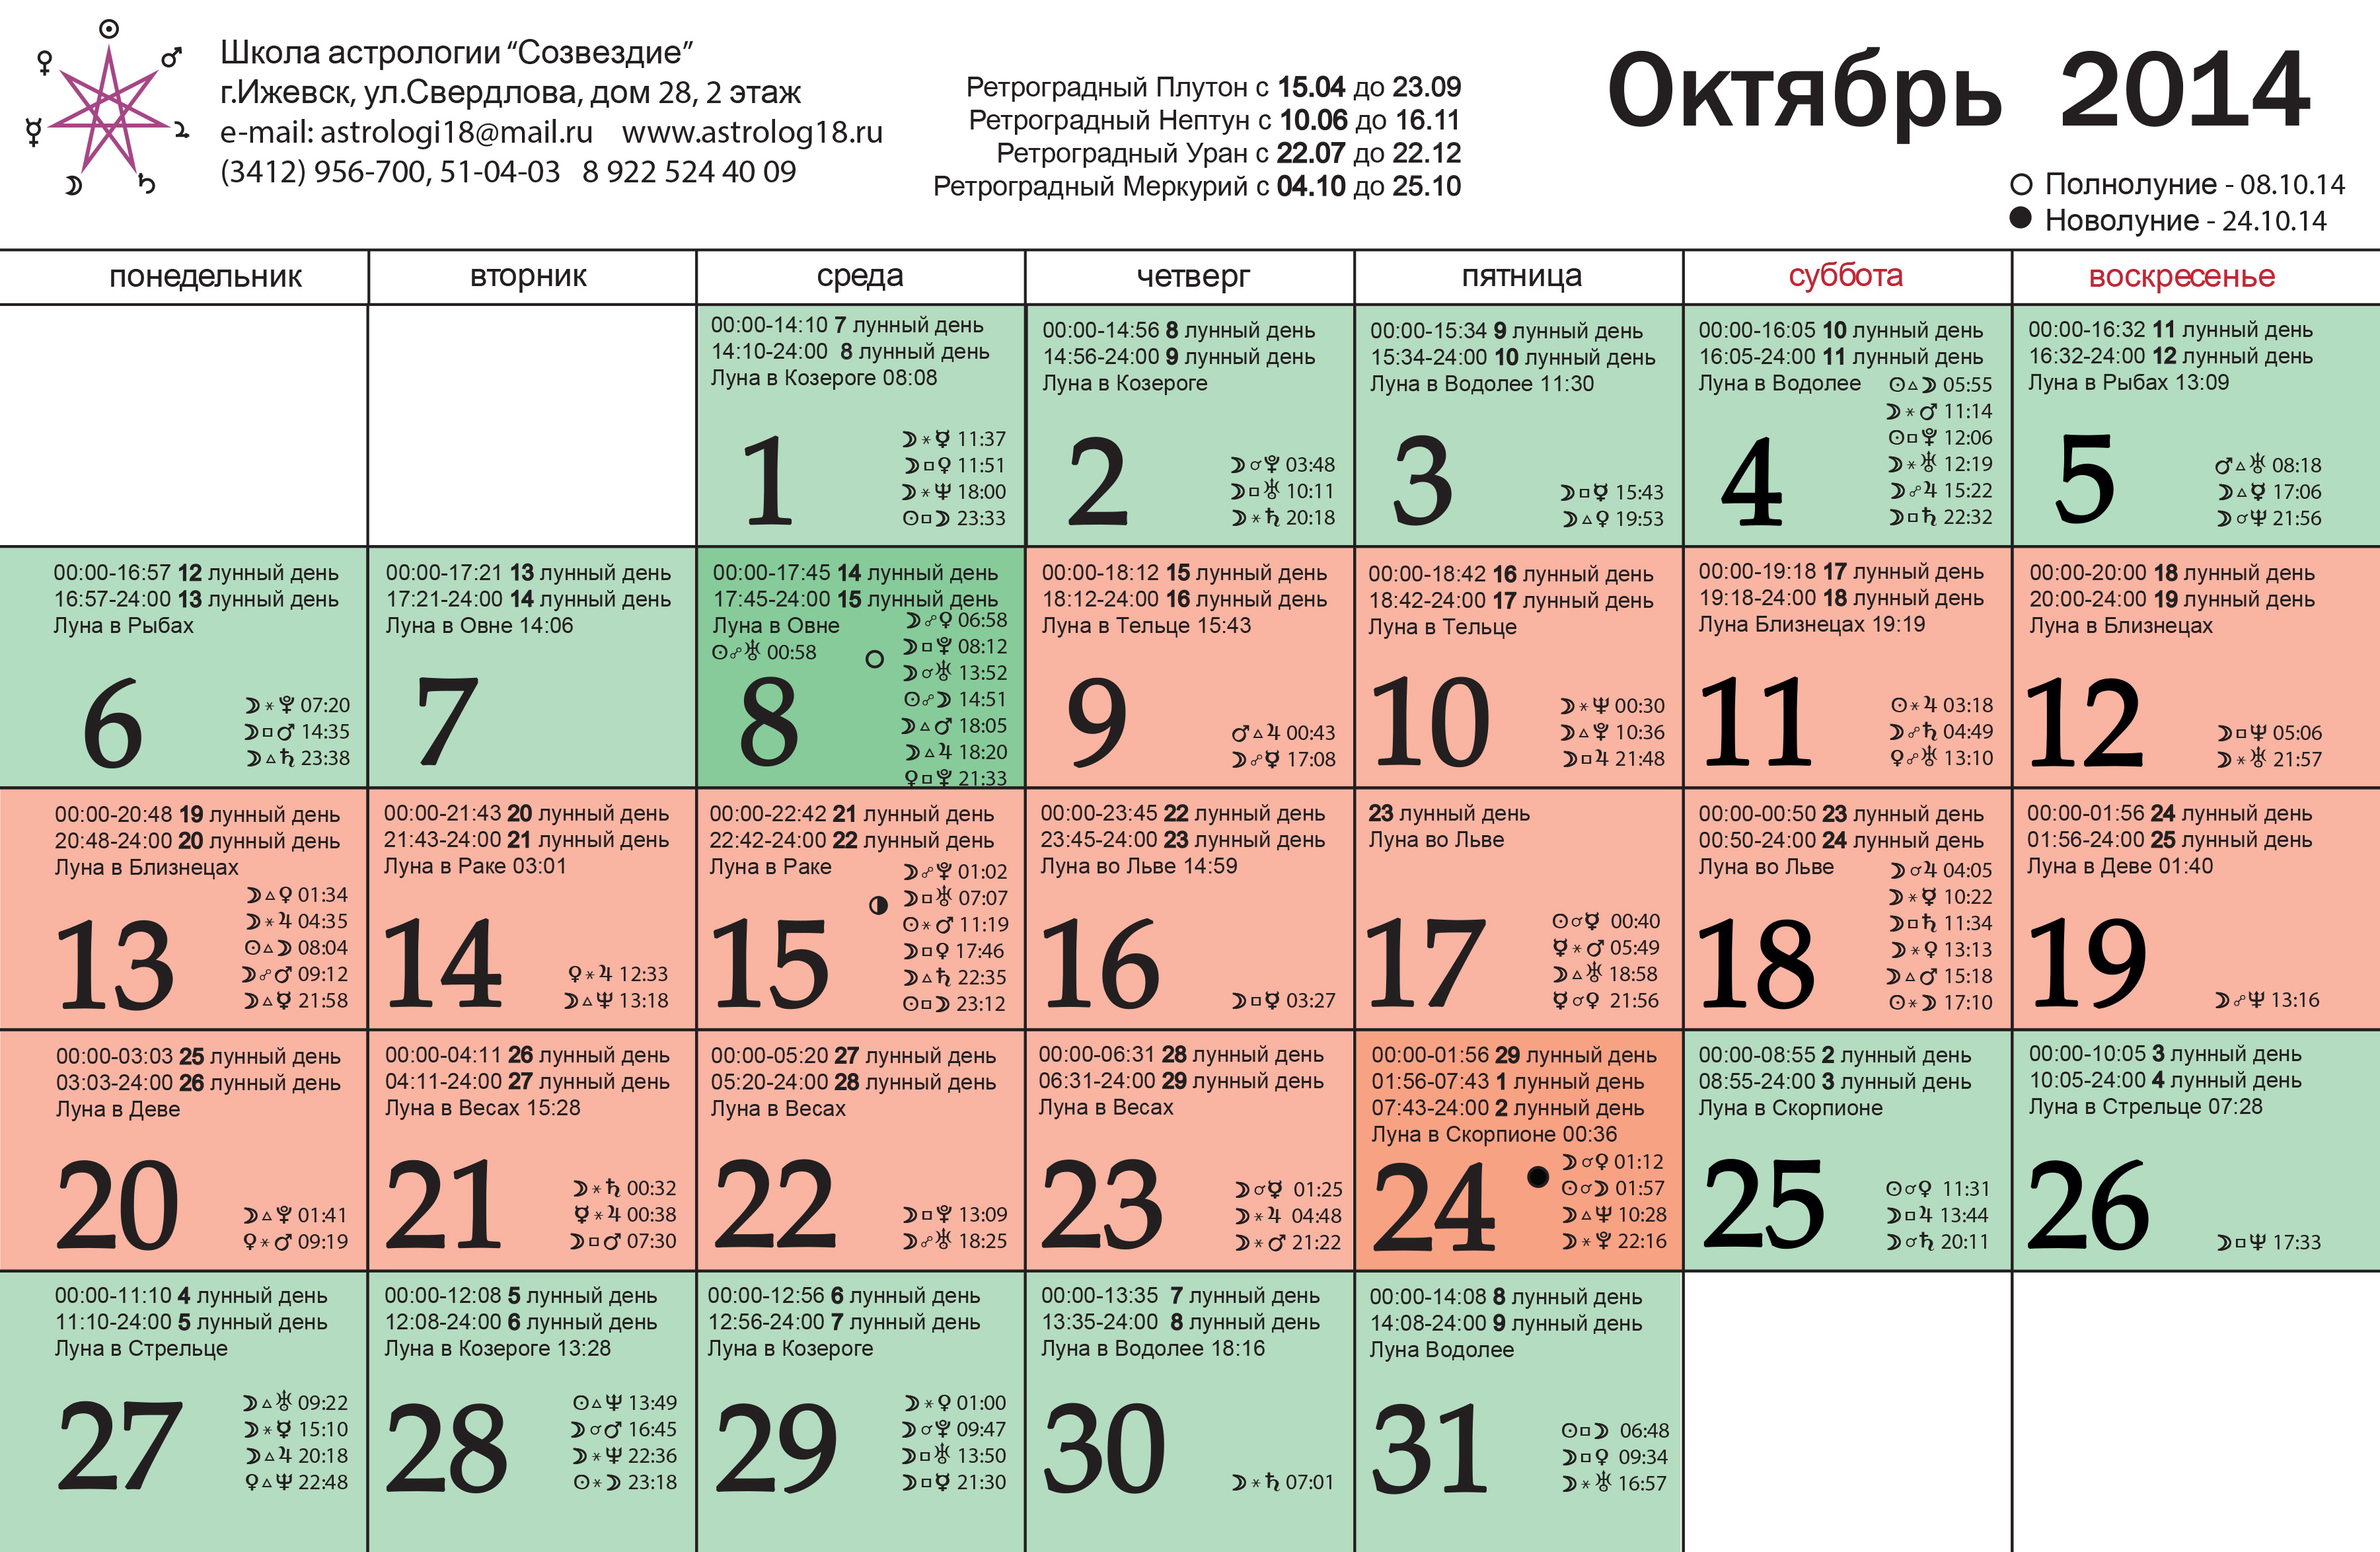 Лунный календарь. Календарь годов по лунному календарю. Октябрь 2014 года календарь.